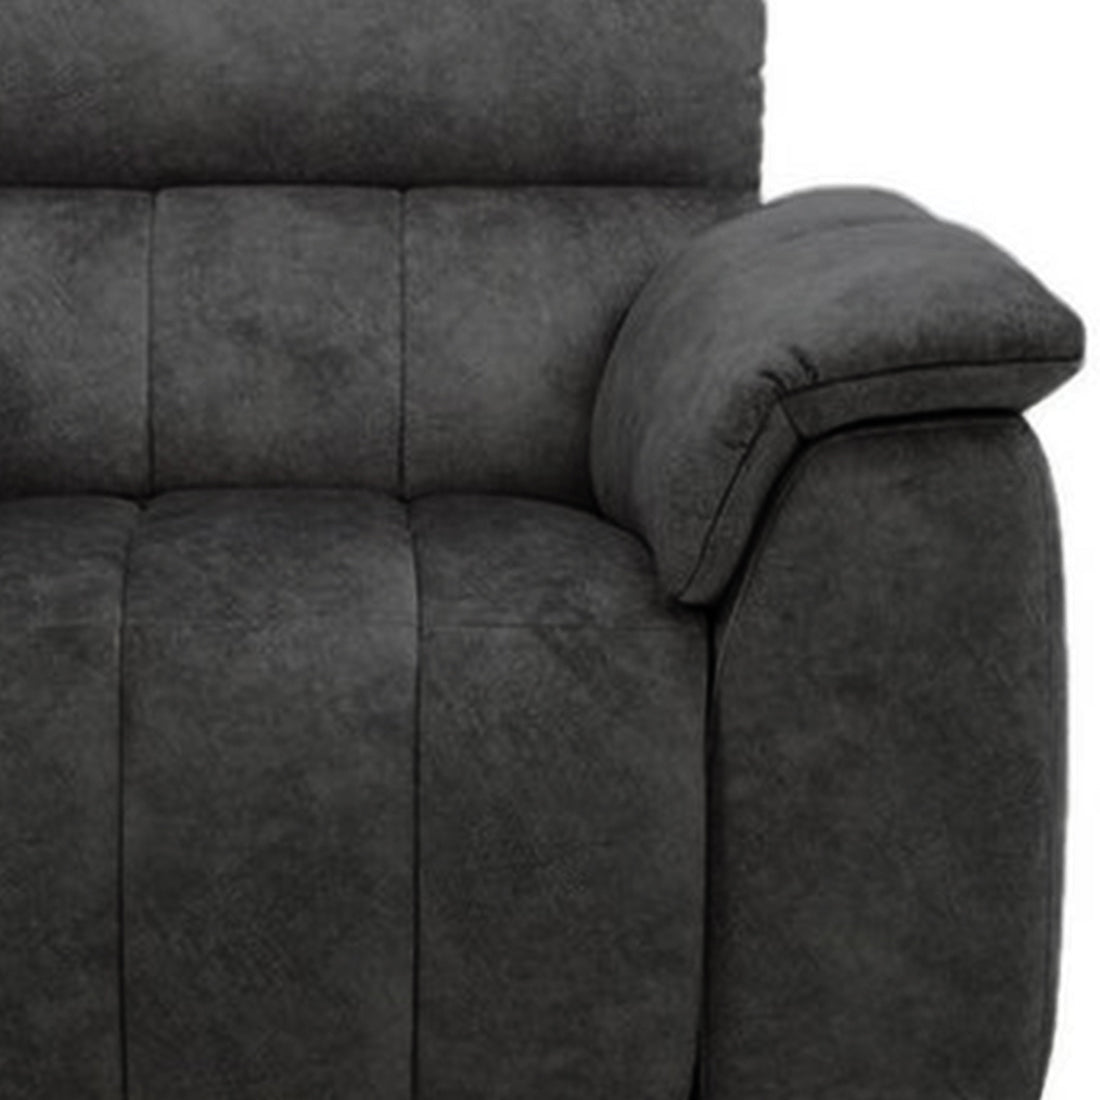 Casanoy 1 Seater Fabric Sofa for Living Room | 1 Seater Fabric Sofa - Torque India